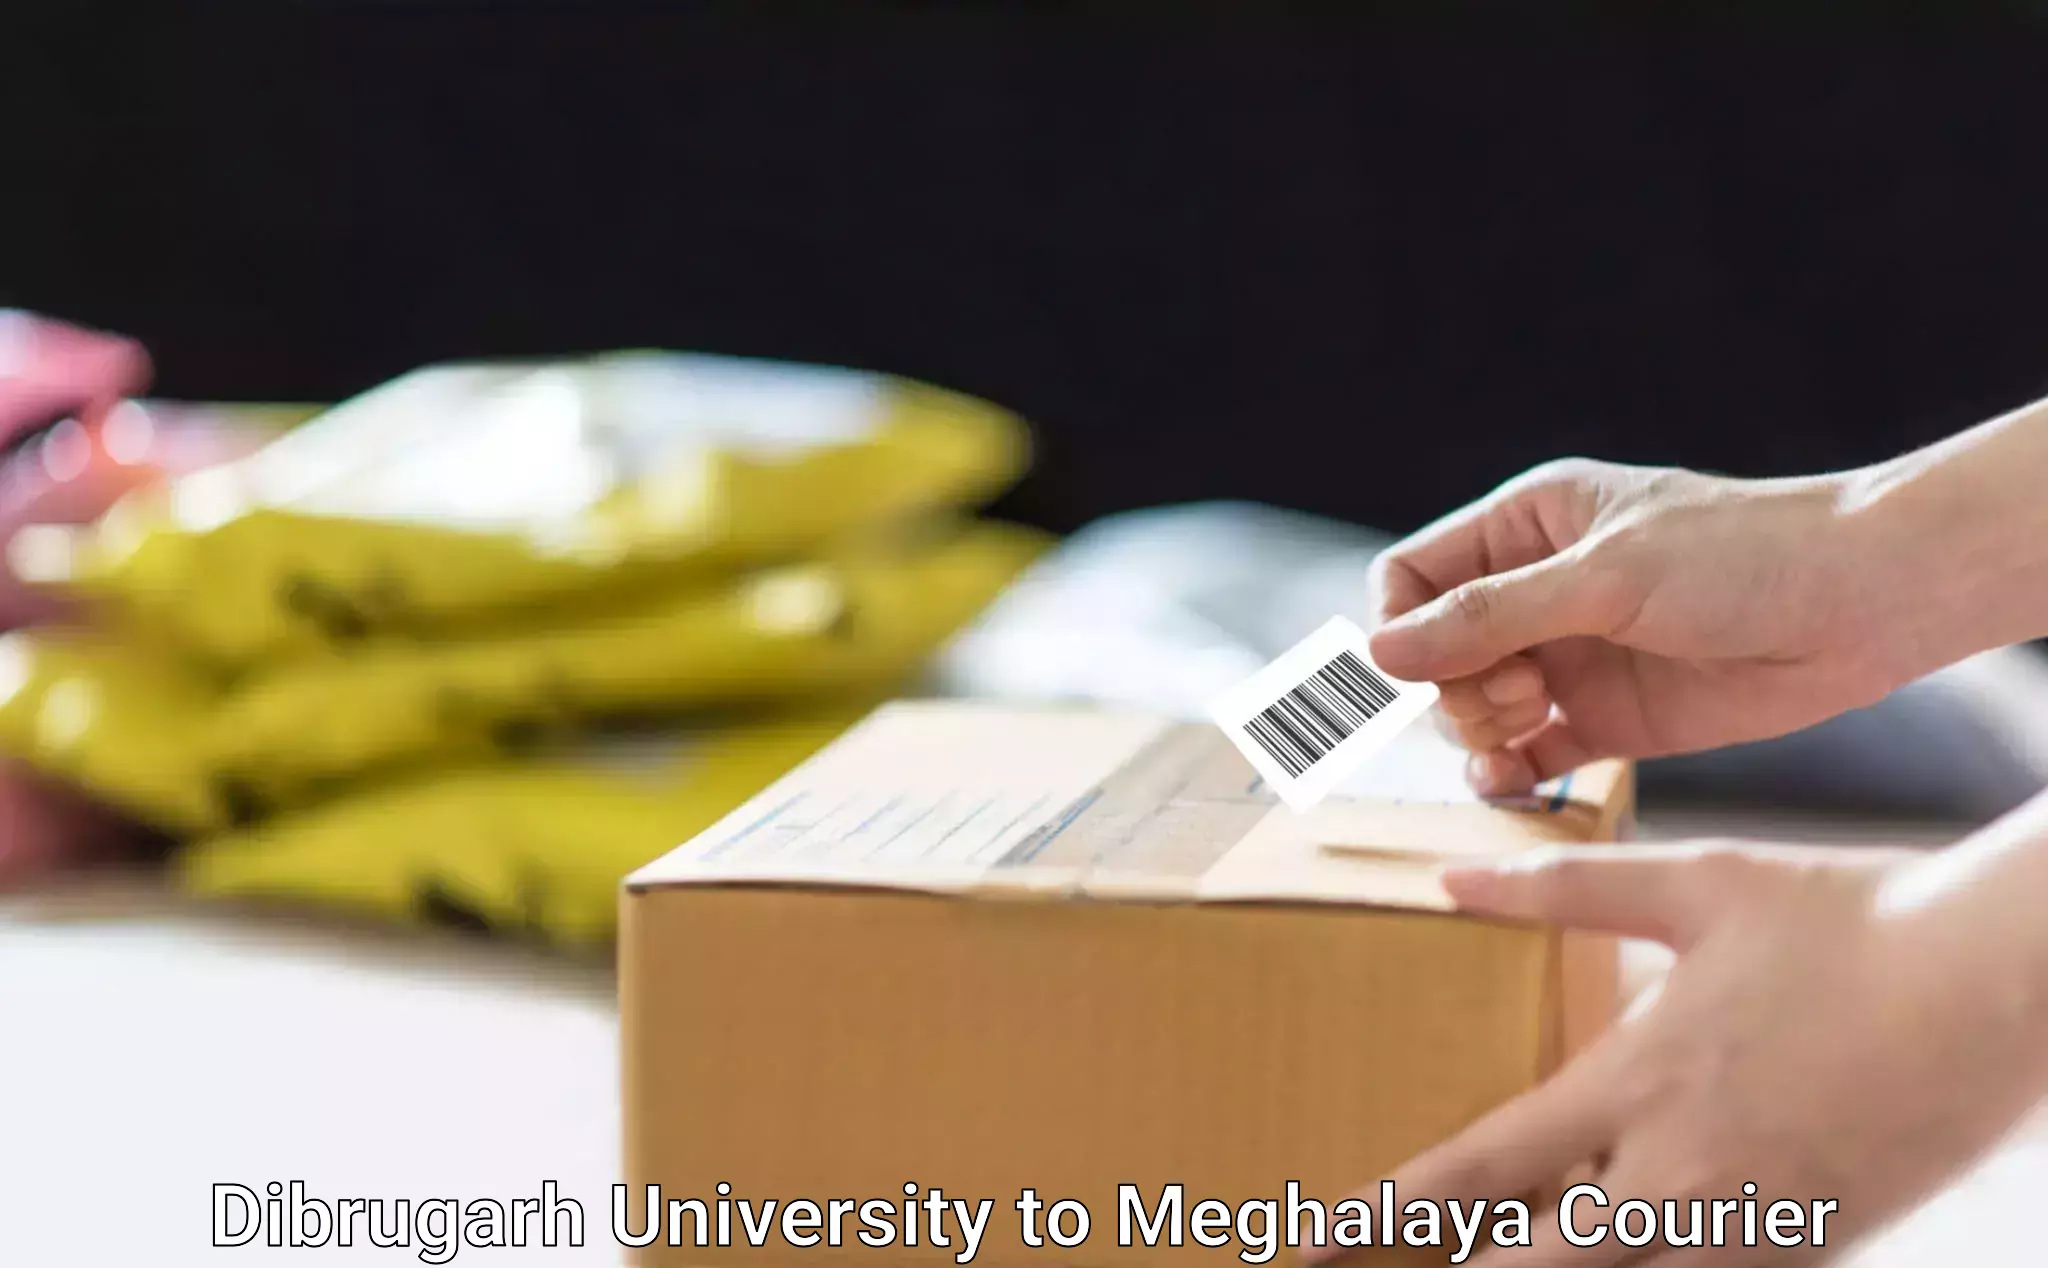 Custom courier packaging Dibrugarh University to East Garo Hills